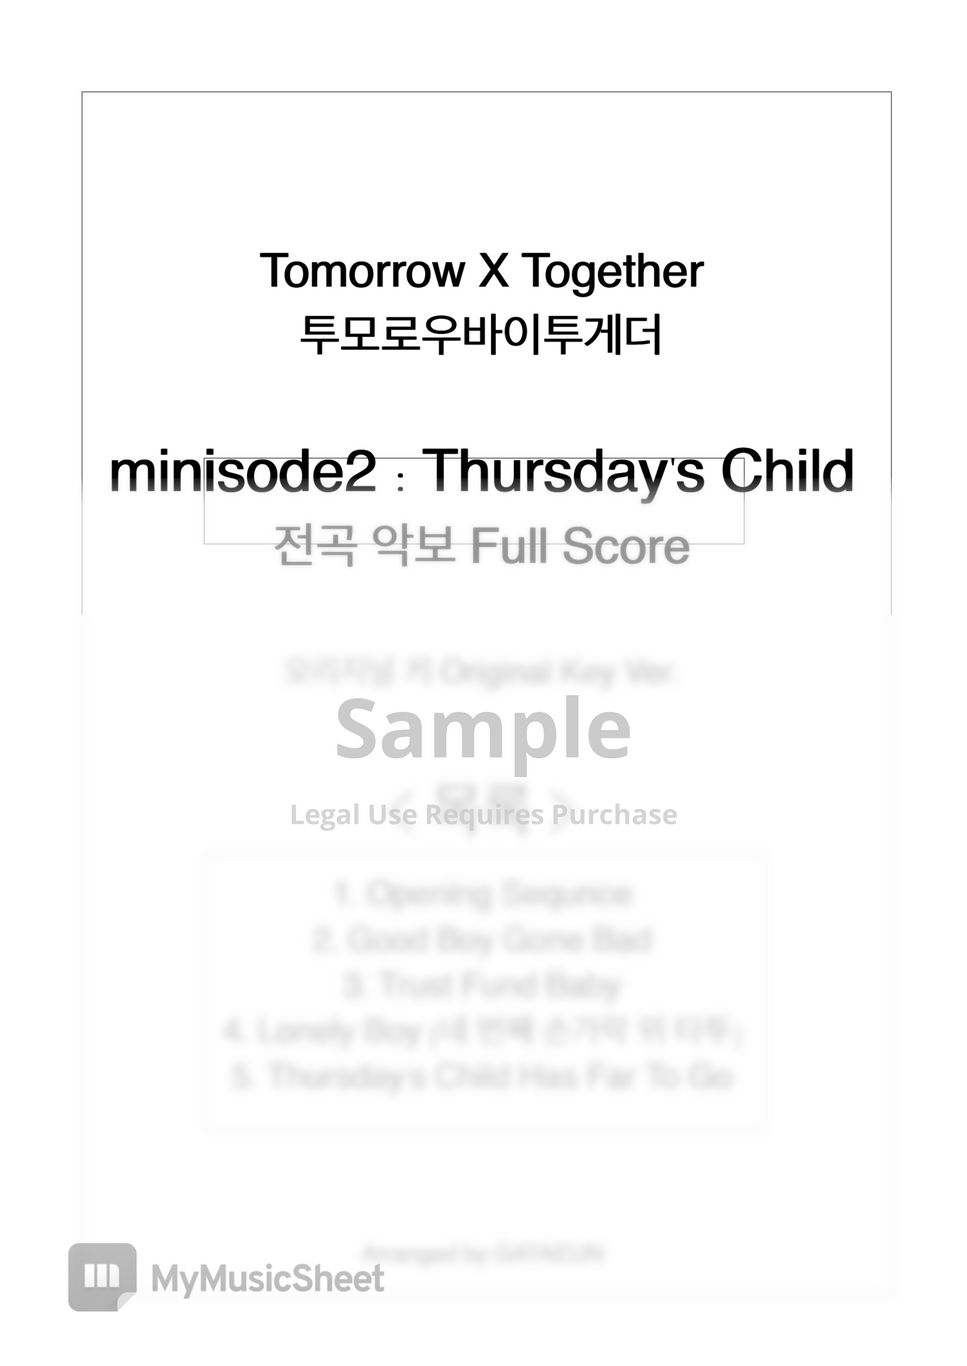 Tomorrow X Together - minisode2 Full Score Original Key Ver. by GATAEUN